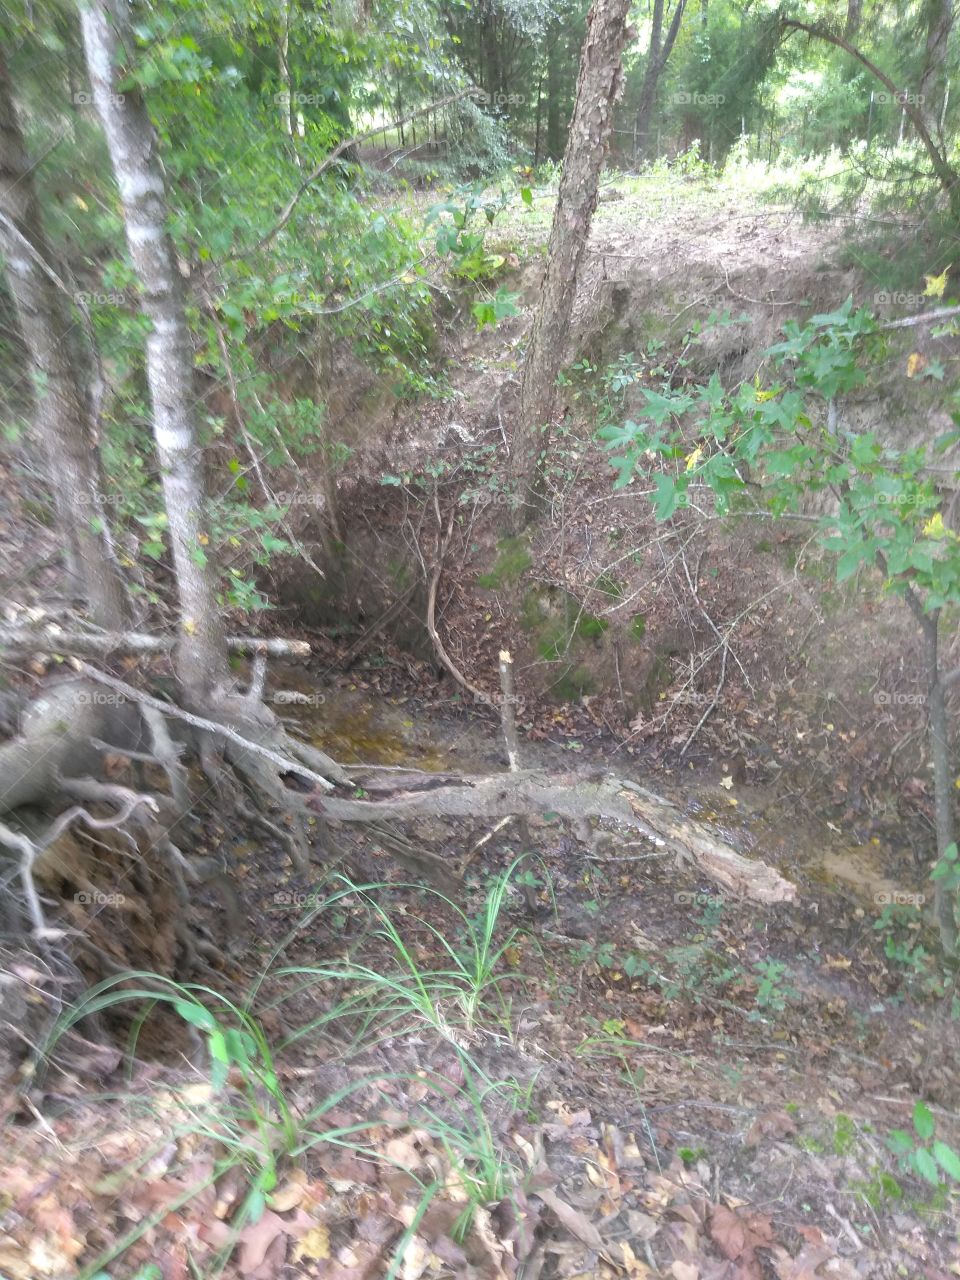 root bound creek bed